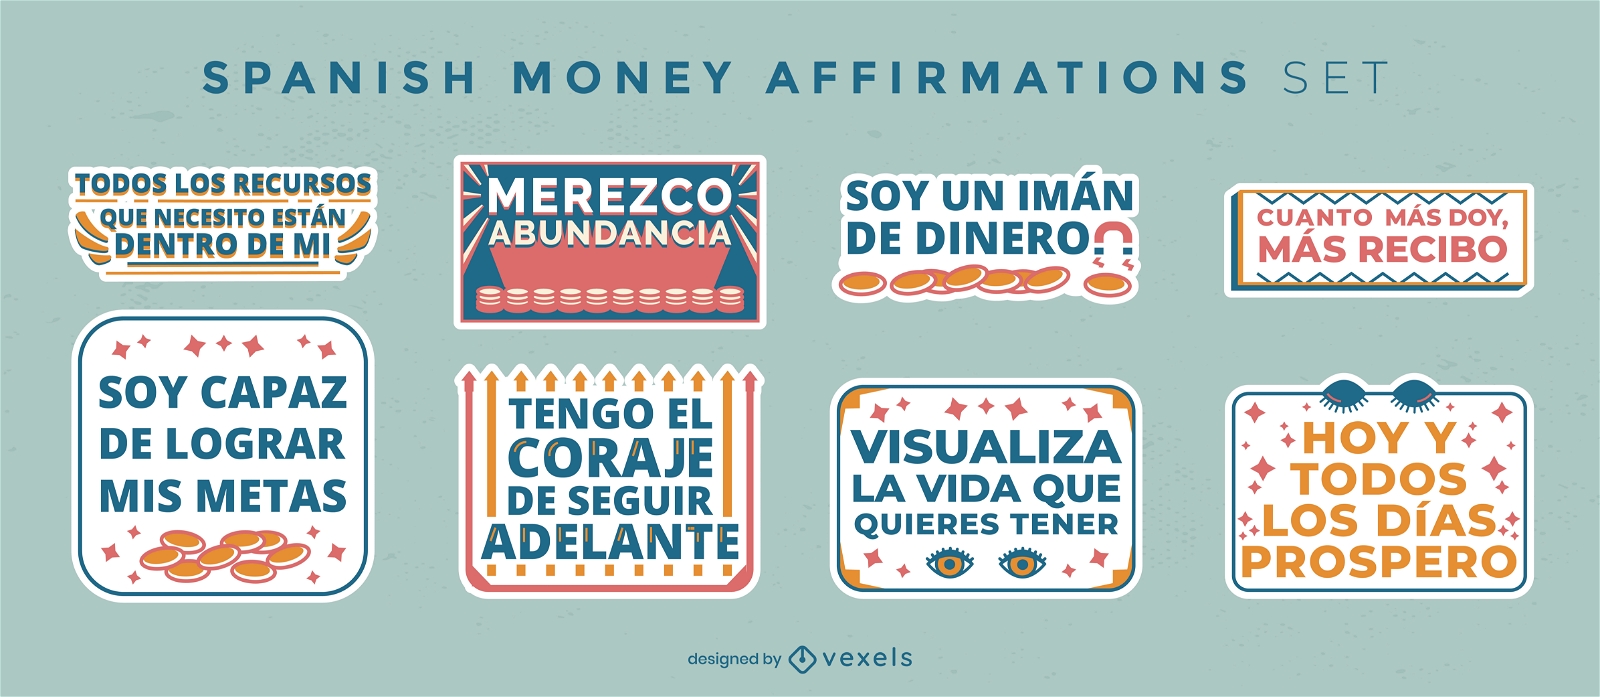 Spanish money affirmation quote set